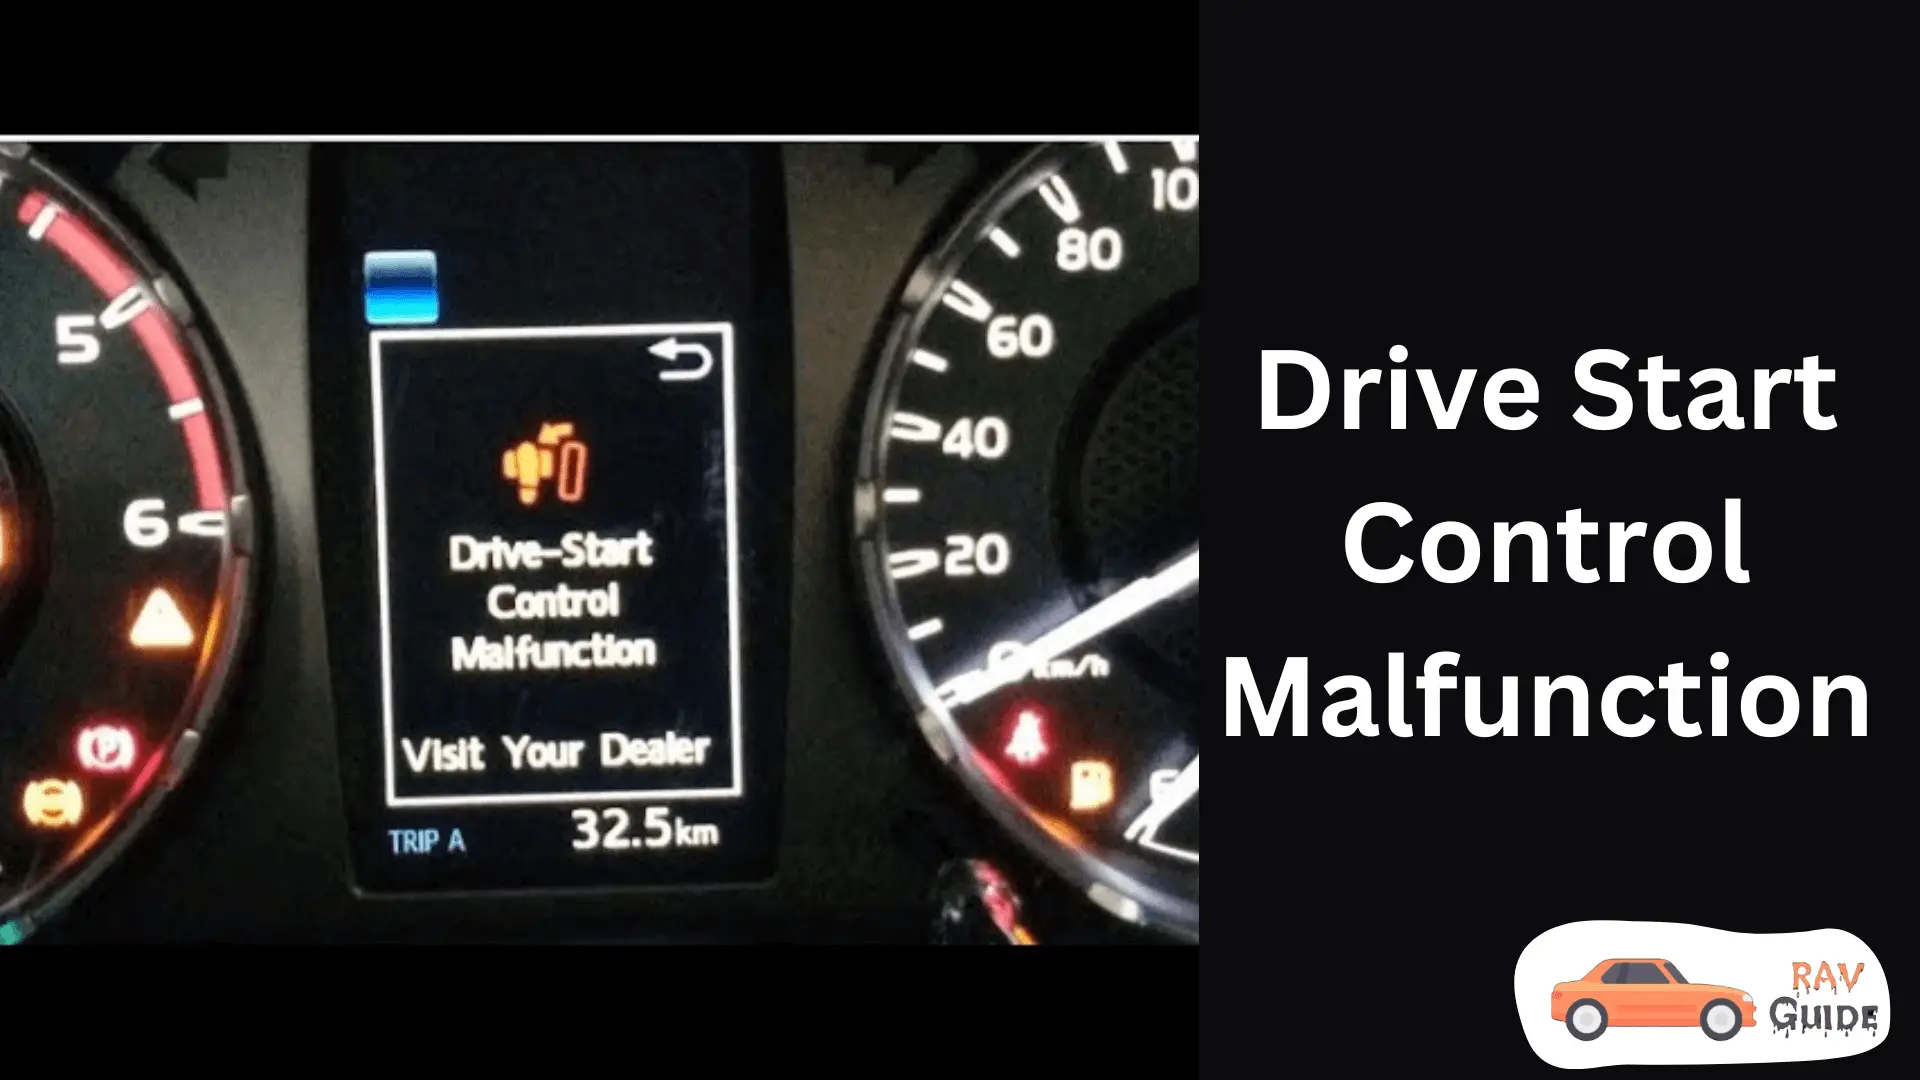 Drive Start Control Malfunction